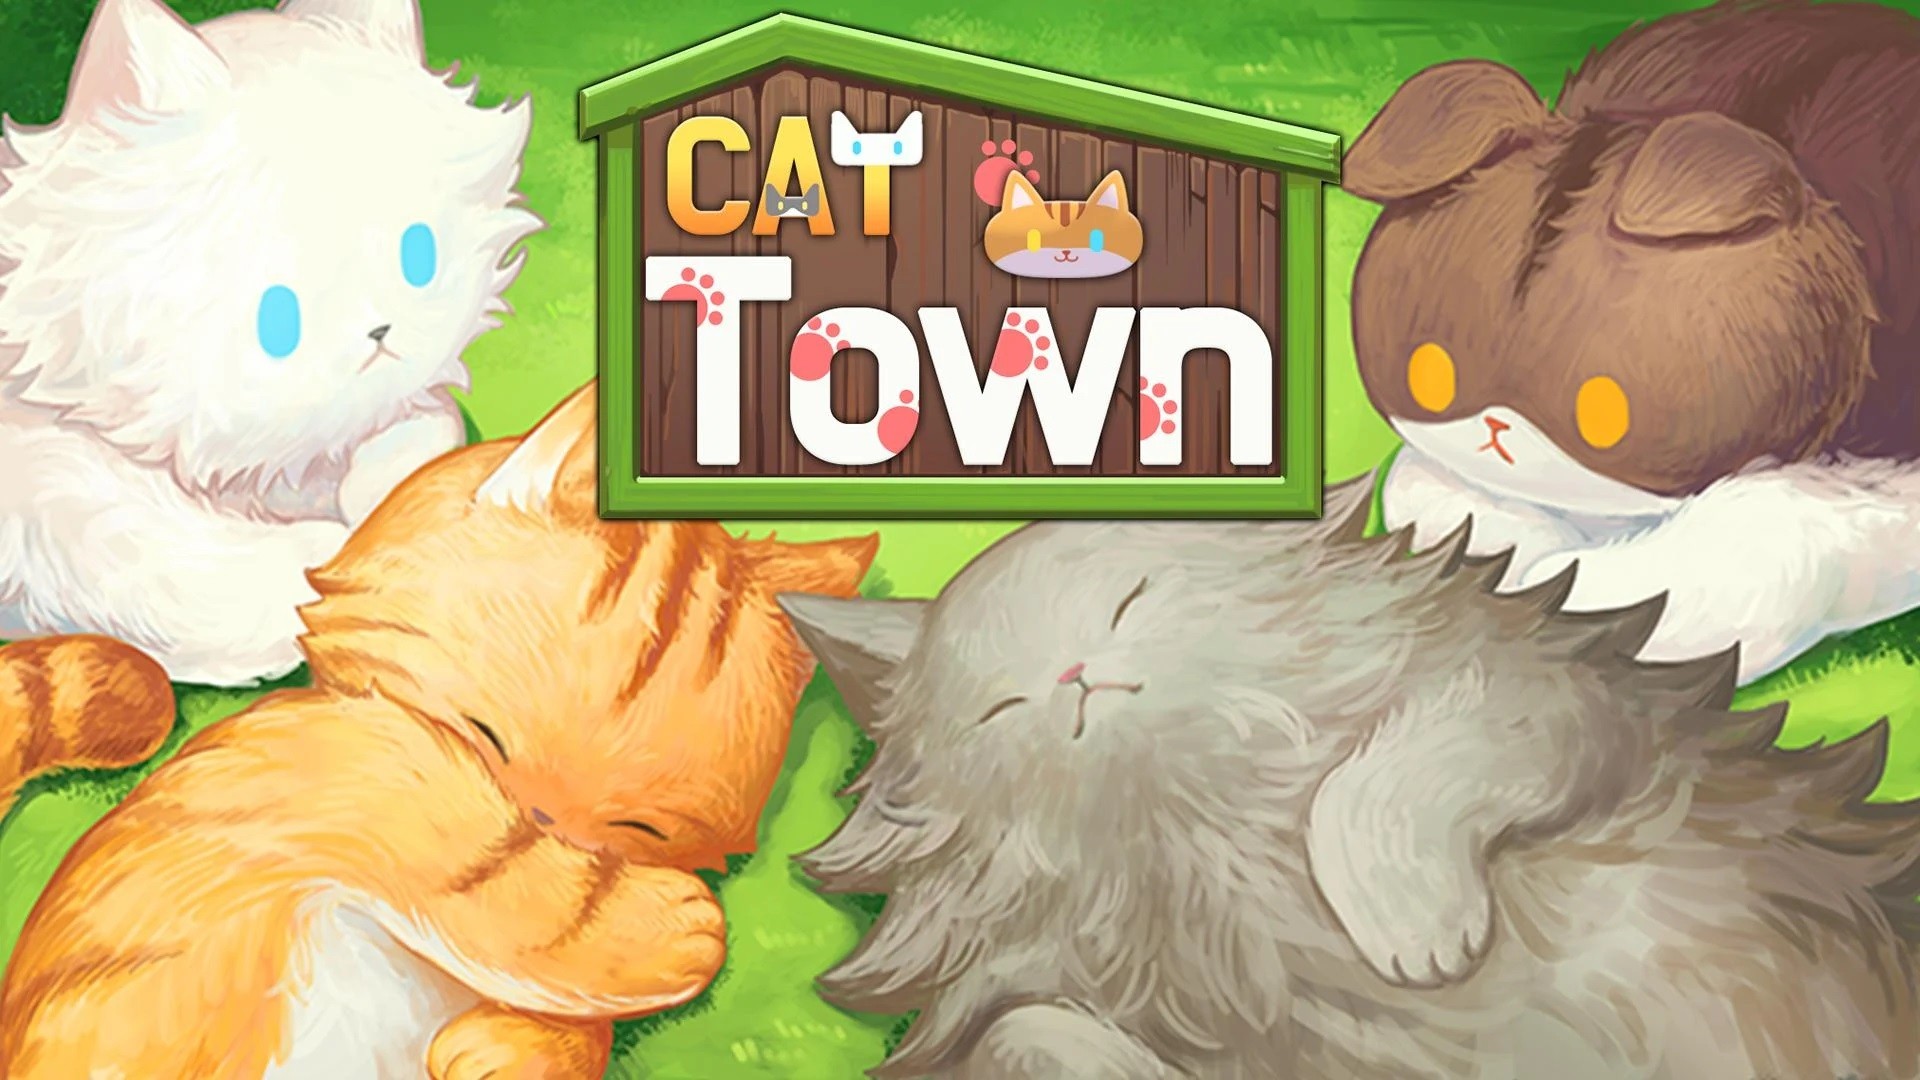 Cats похожие игры. Кэт Таун. Кошачий город игра. Cat Town tap RPG. Cat Town PC мод.